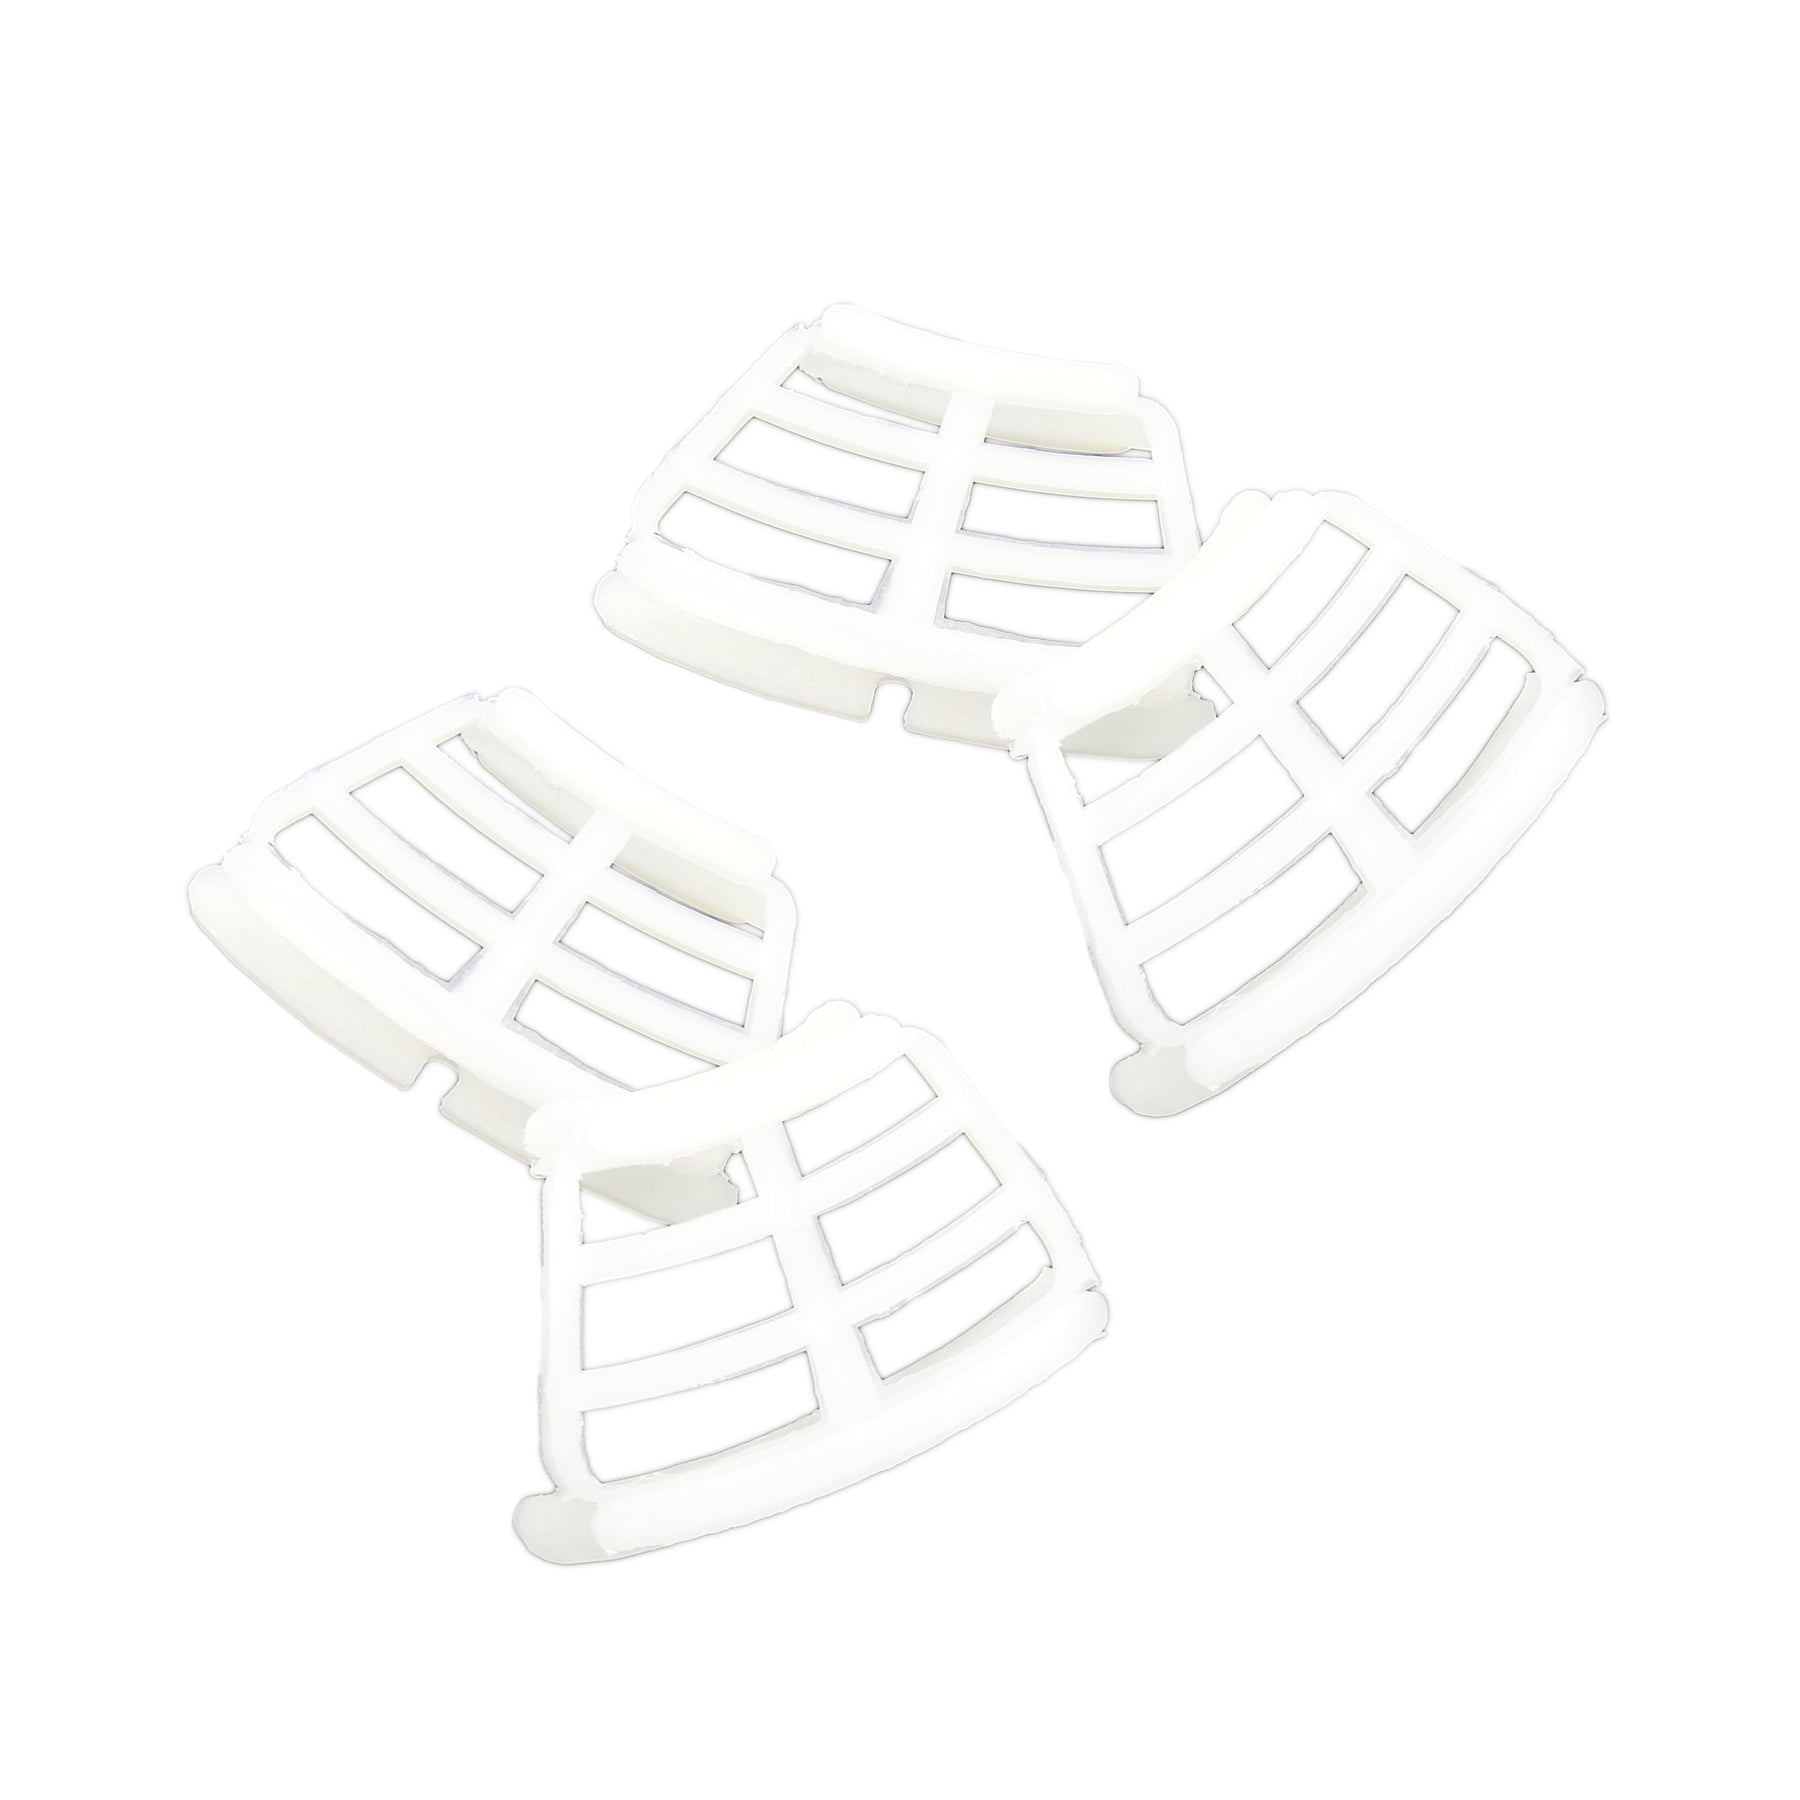 Lambretta - Disc Hub Window Cover Set - White Plastic